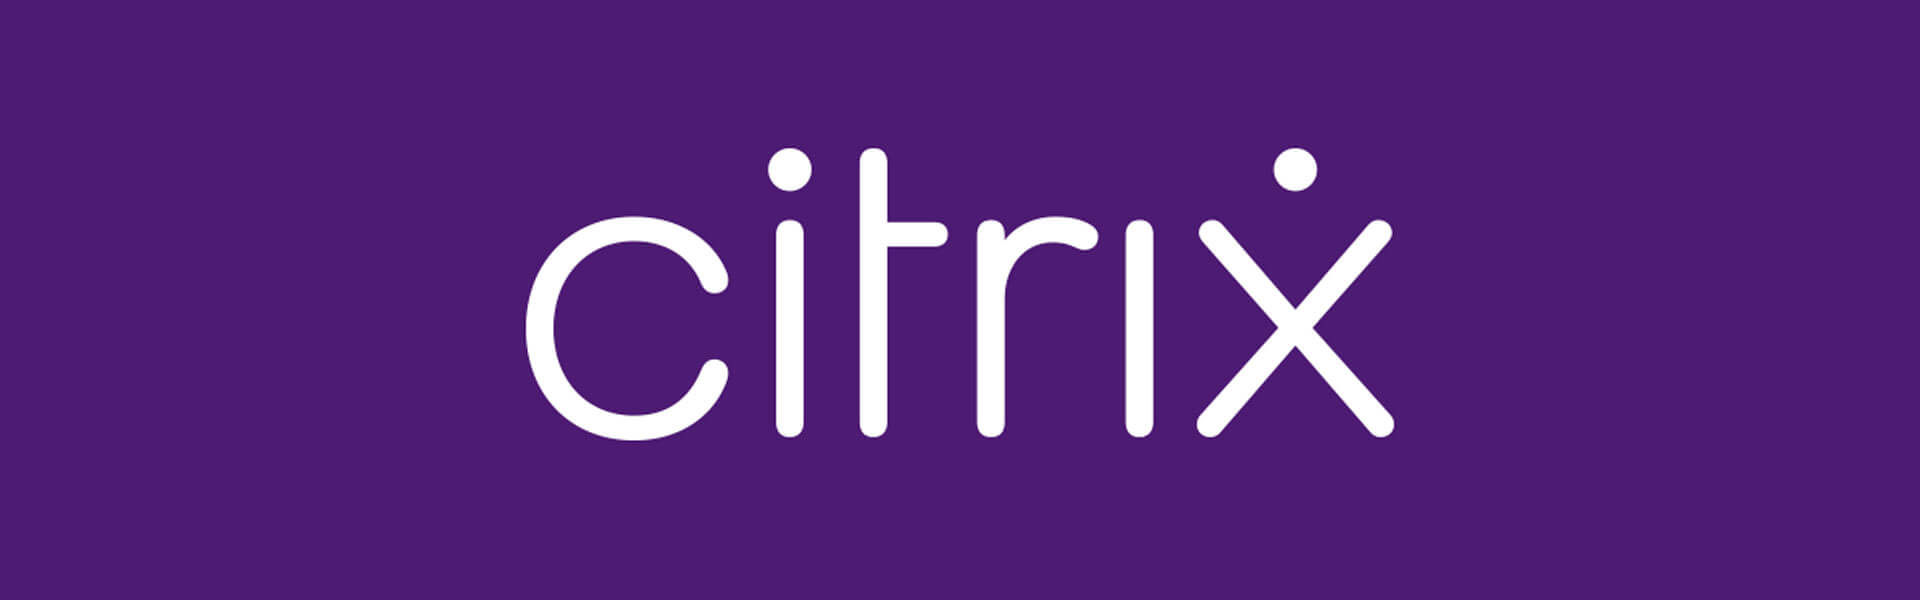 citrix-banner